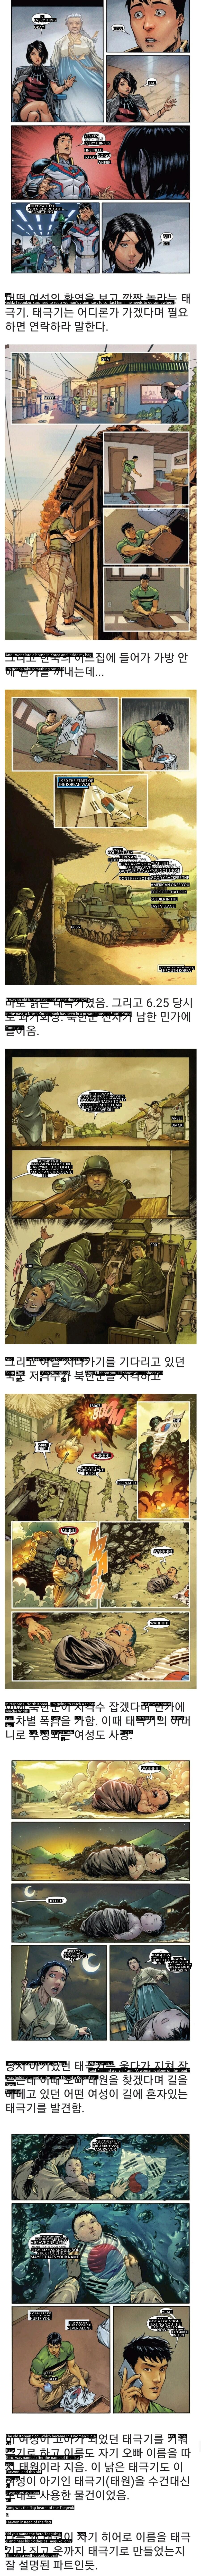 The Origin of the Korean Hero Taegeukgi in Marvel